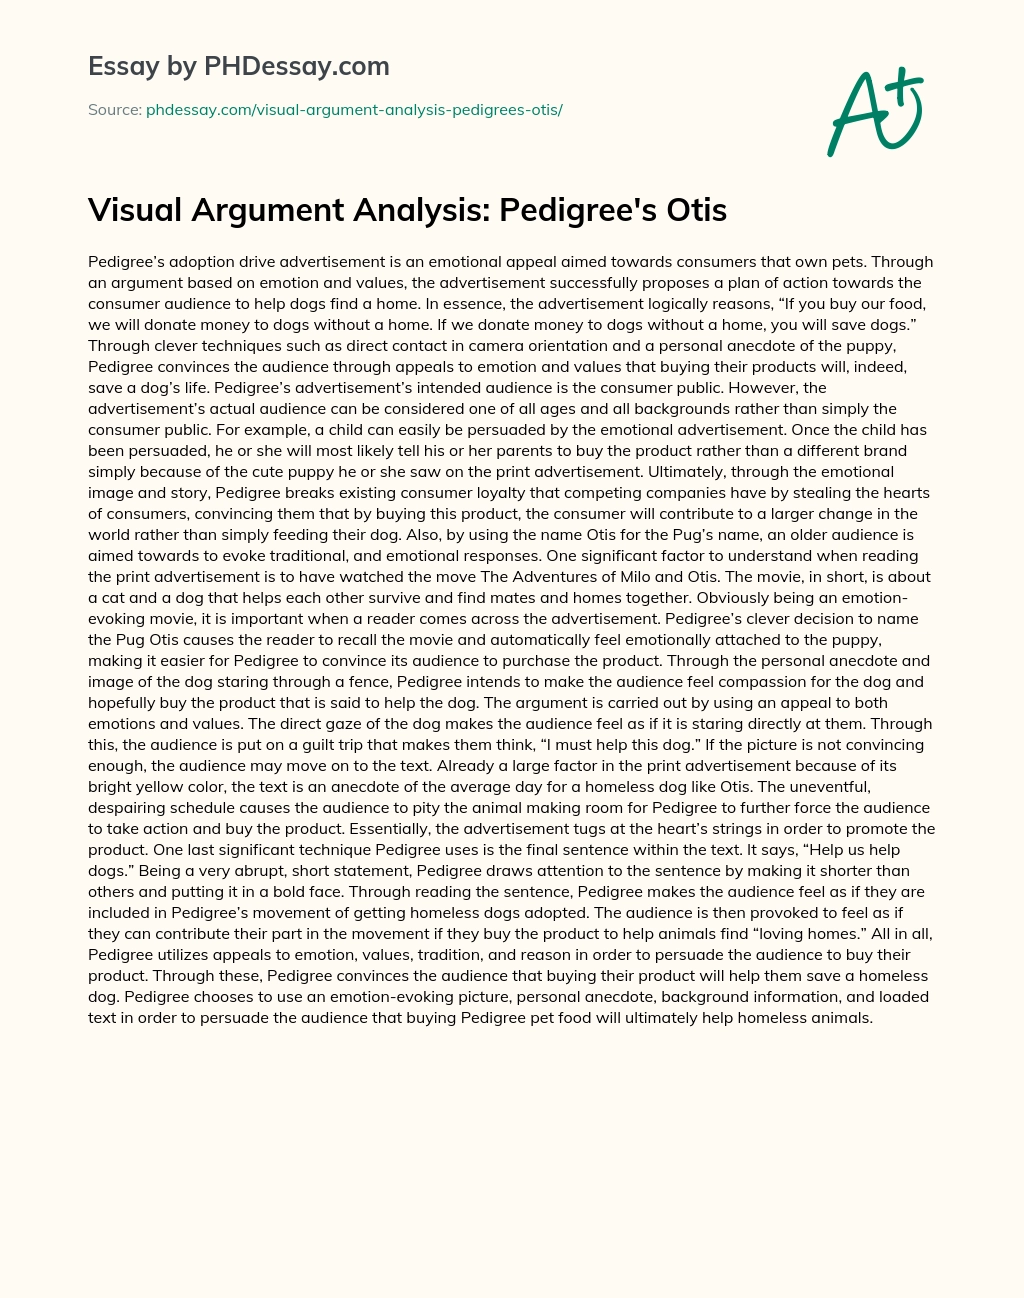 Visual Argument Analysis: Pedigree’s Otis essay